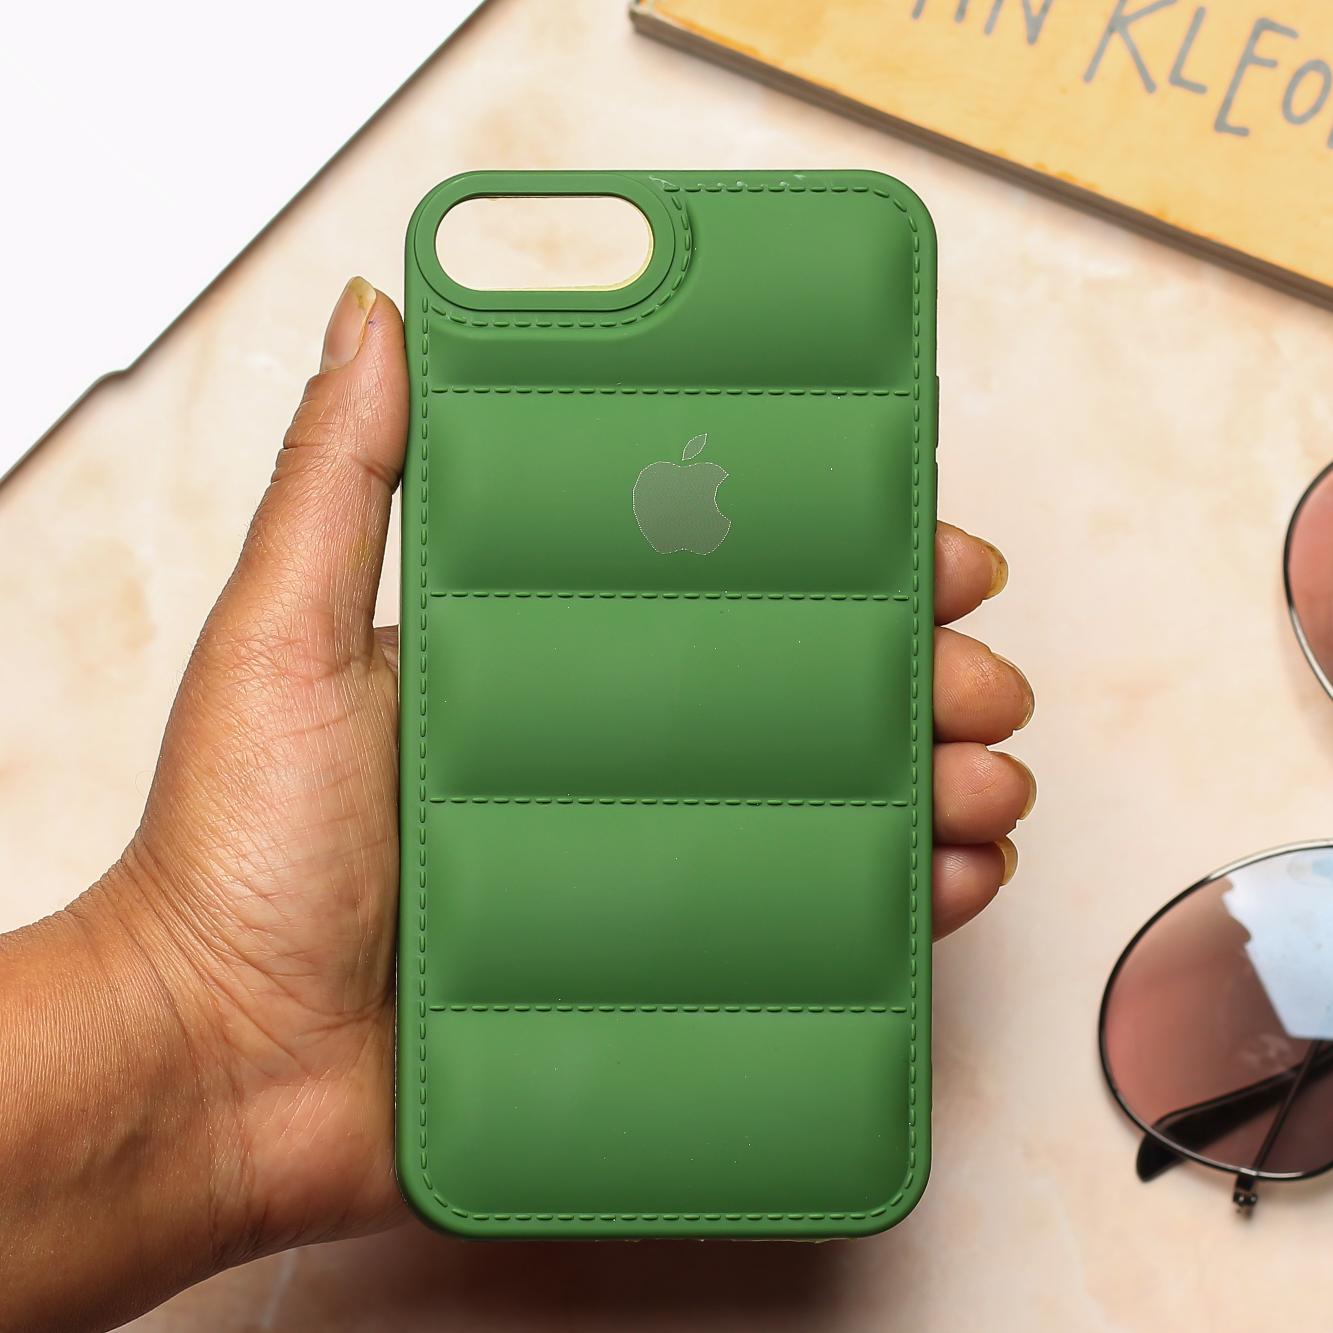 Dark Green Puffon silicone case for Apple iPhone 8 Plus